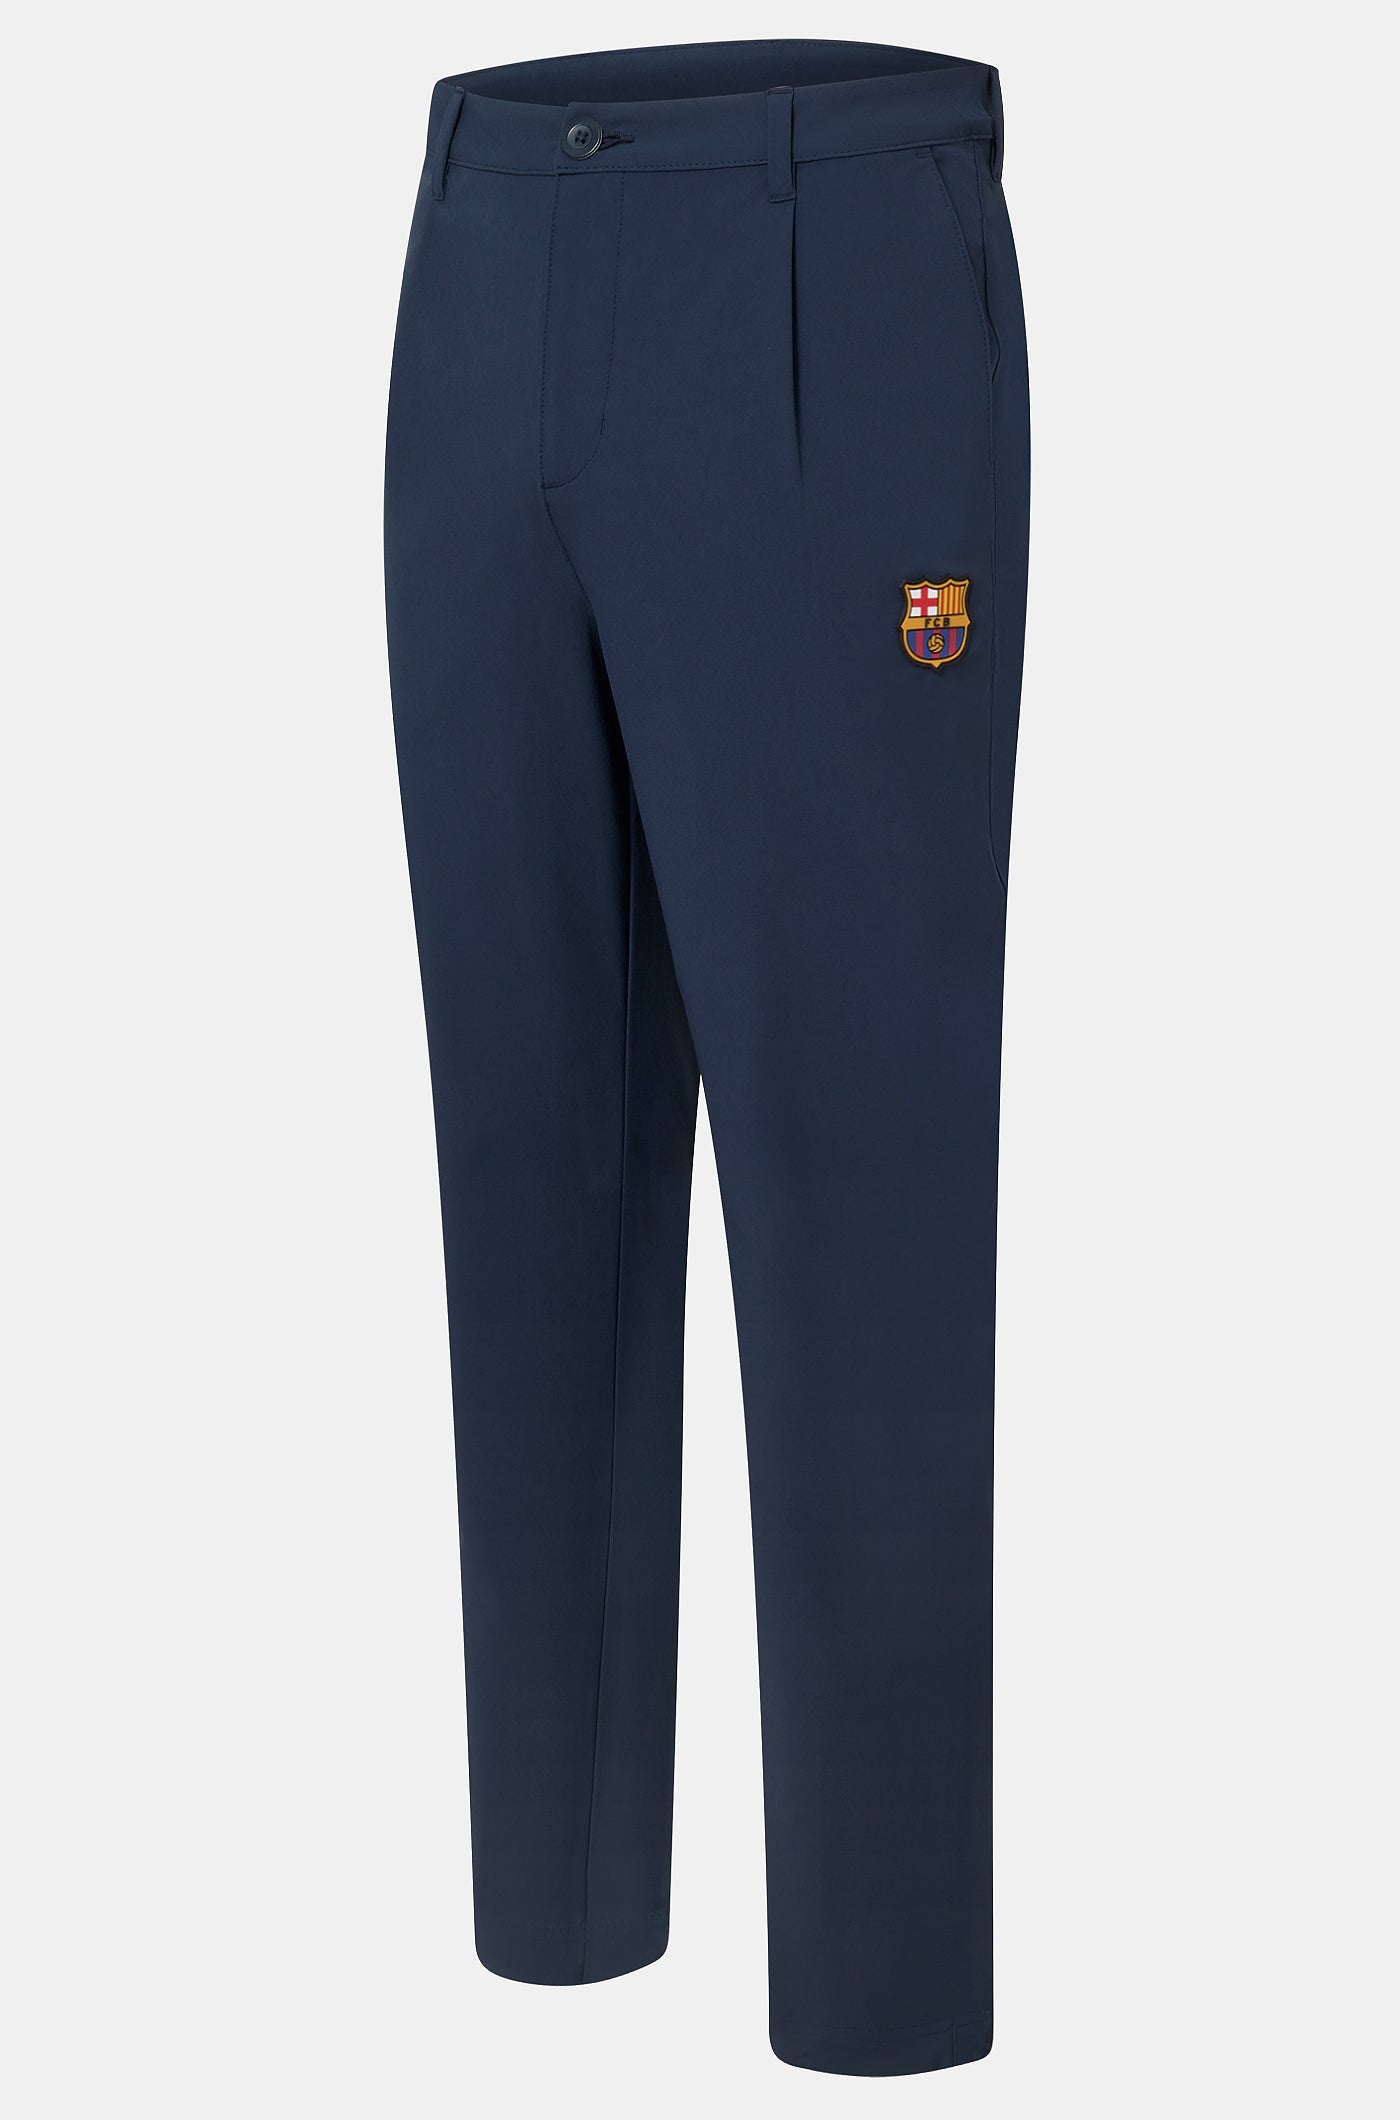 Pantalons blau marí del Barça